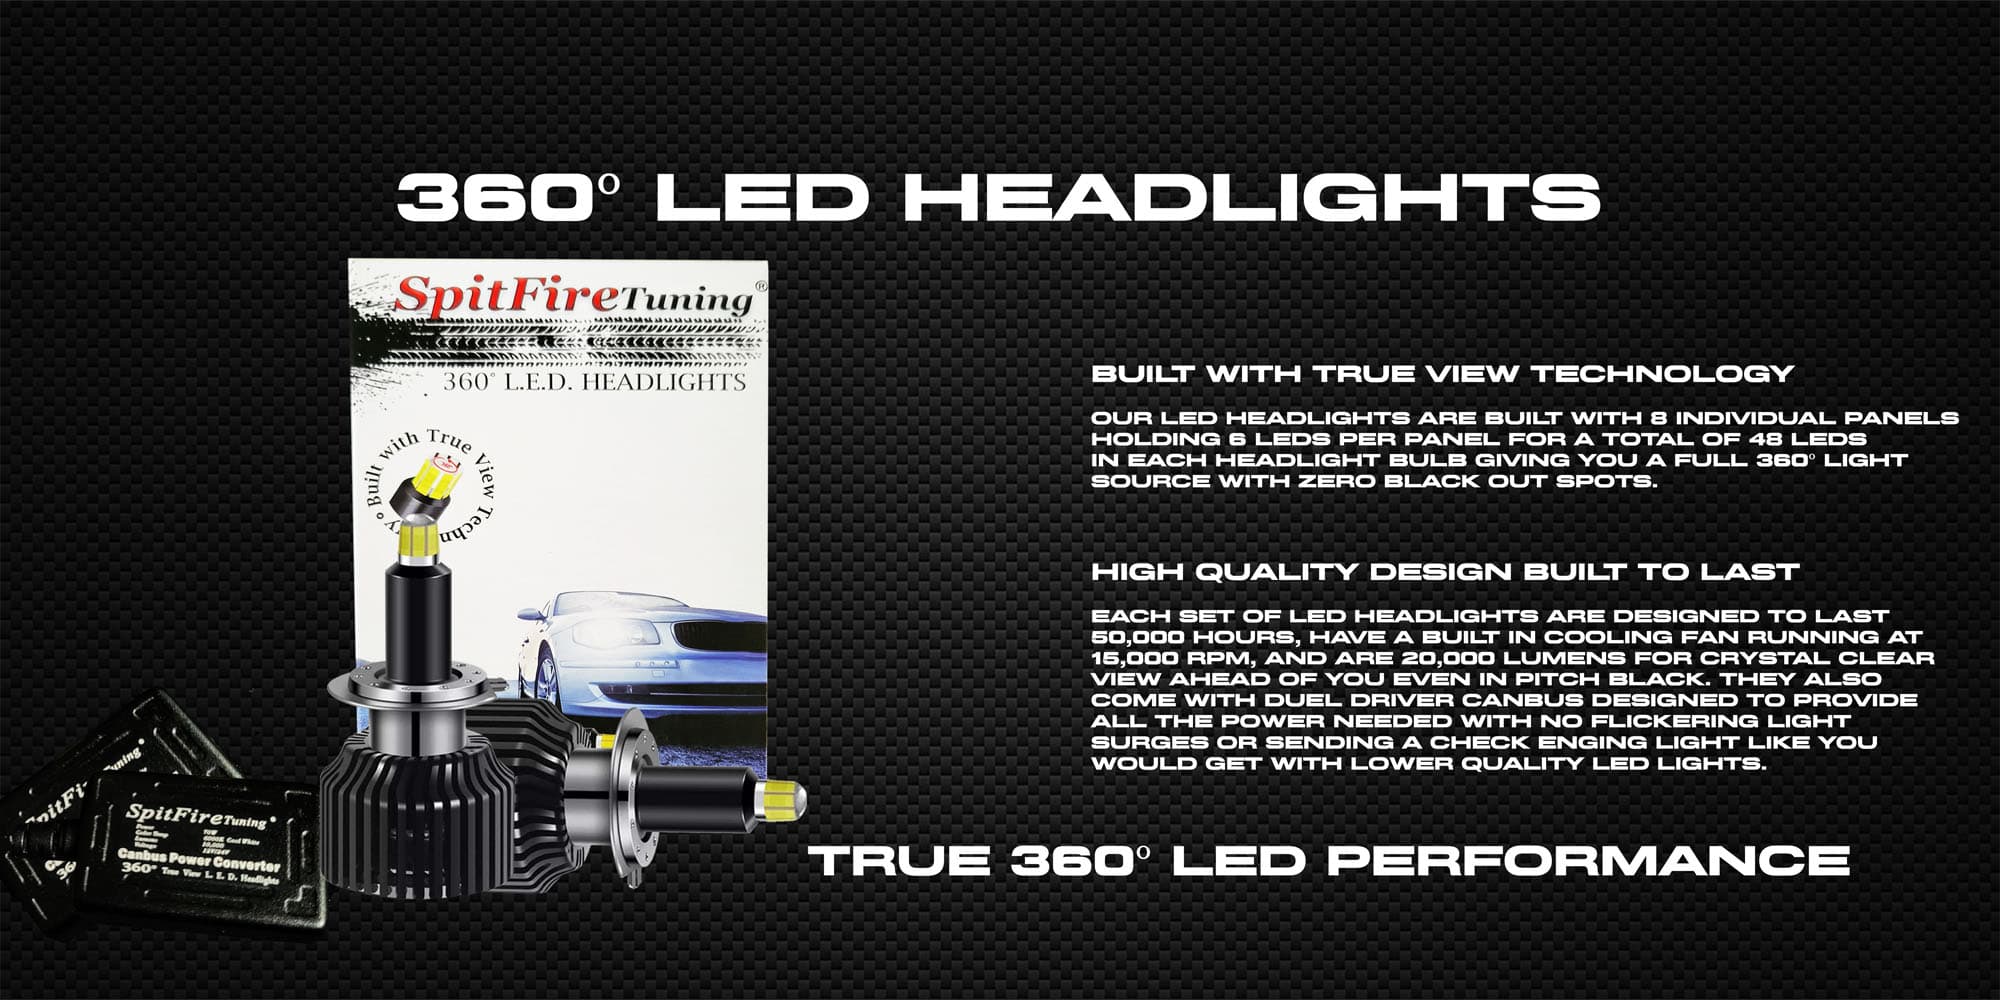 03 Carousel Images LED headlights